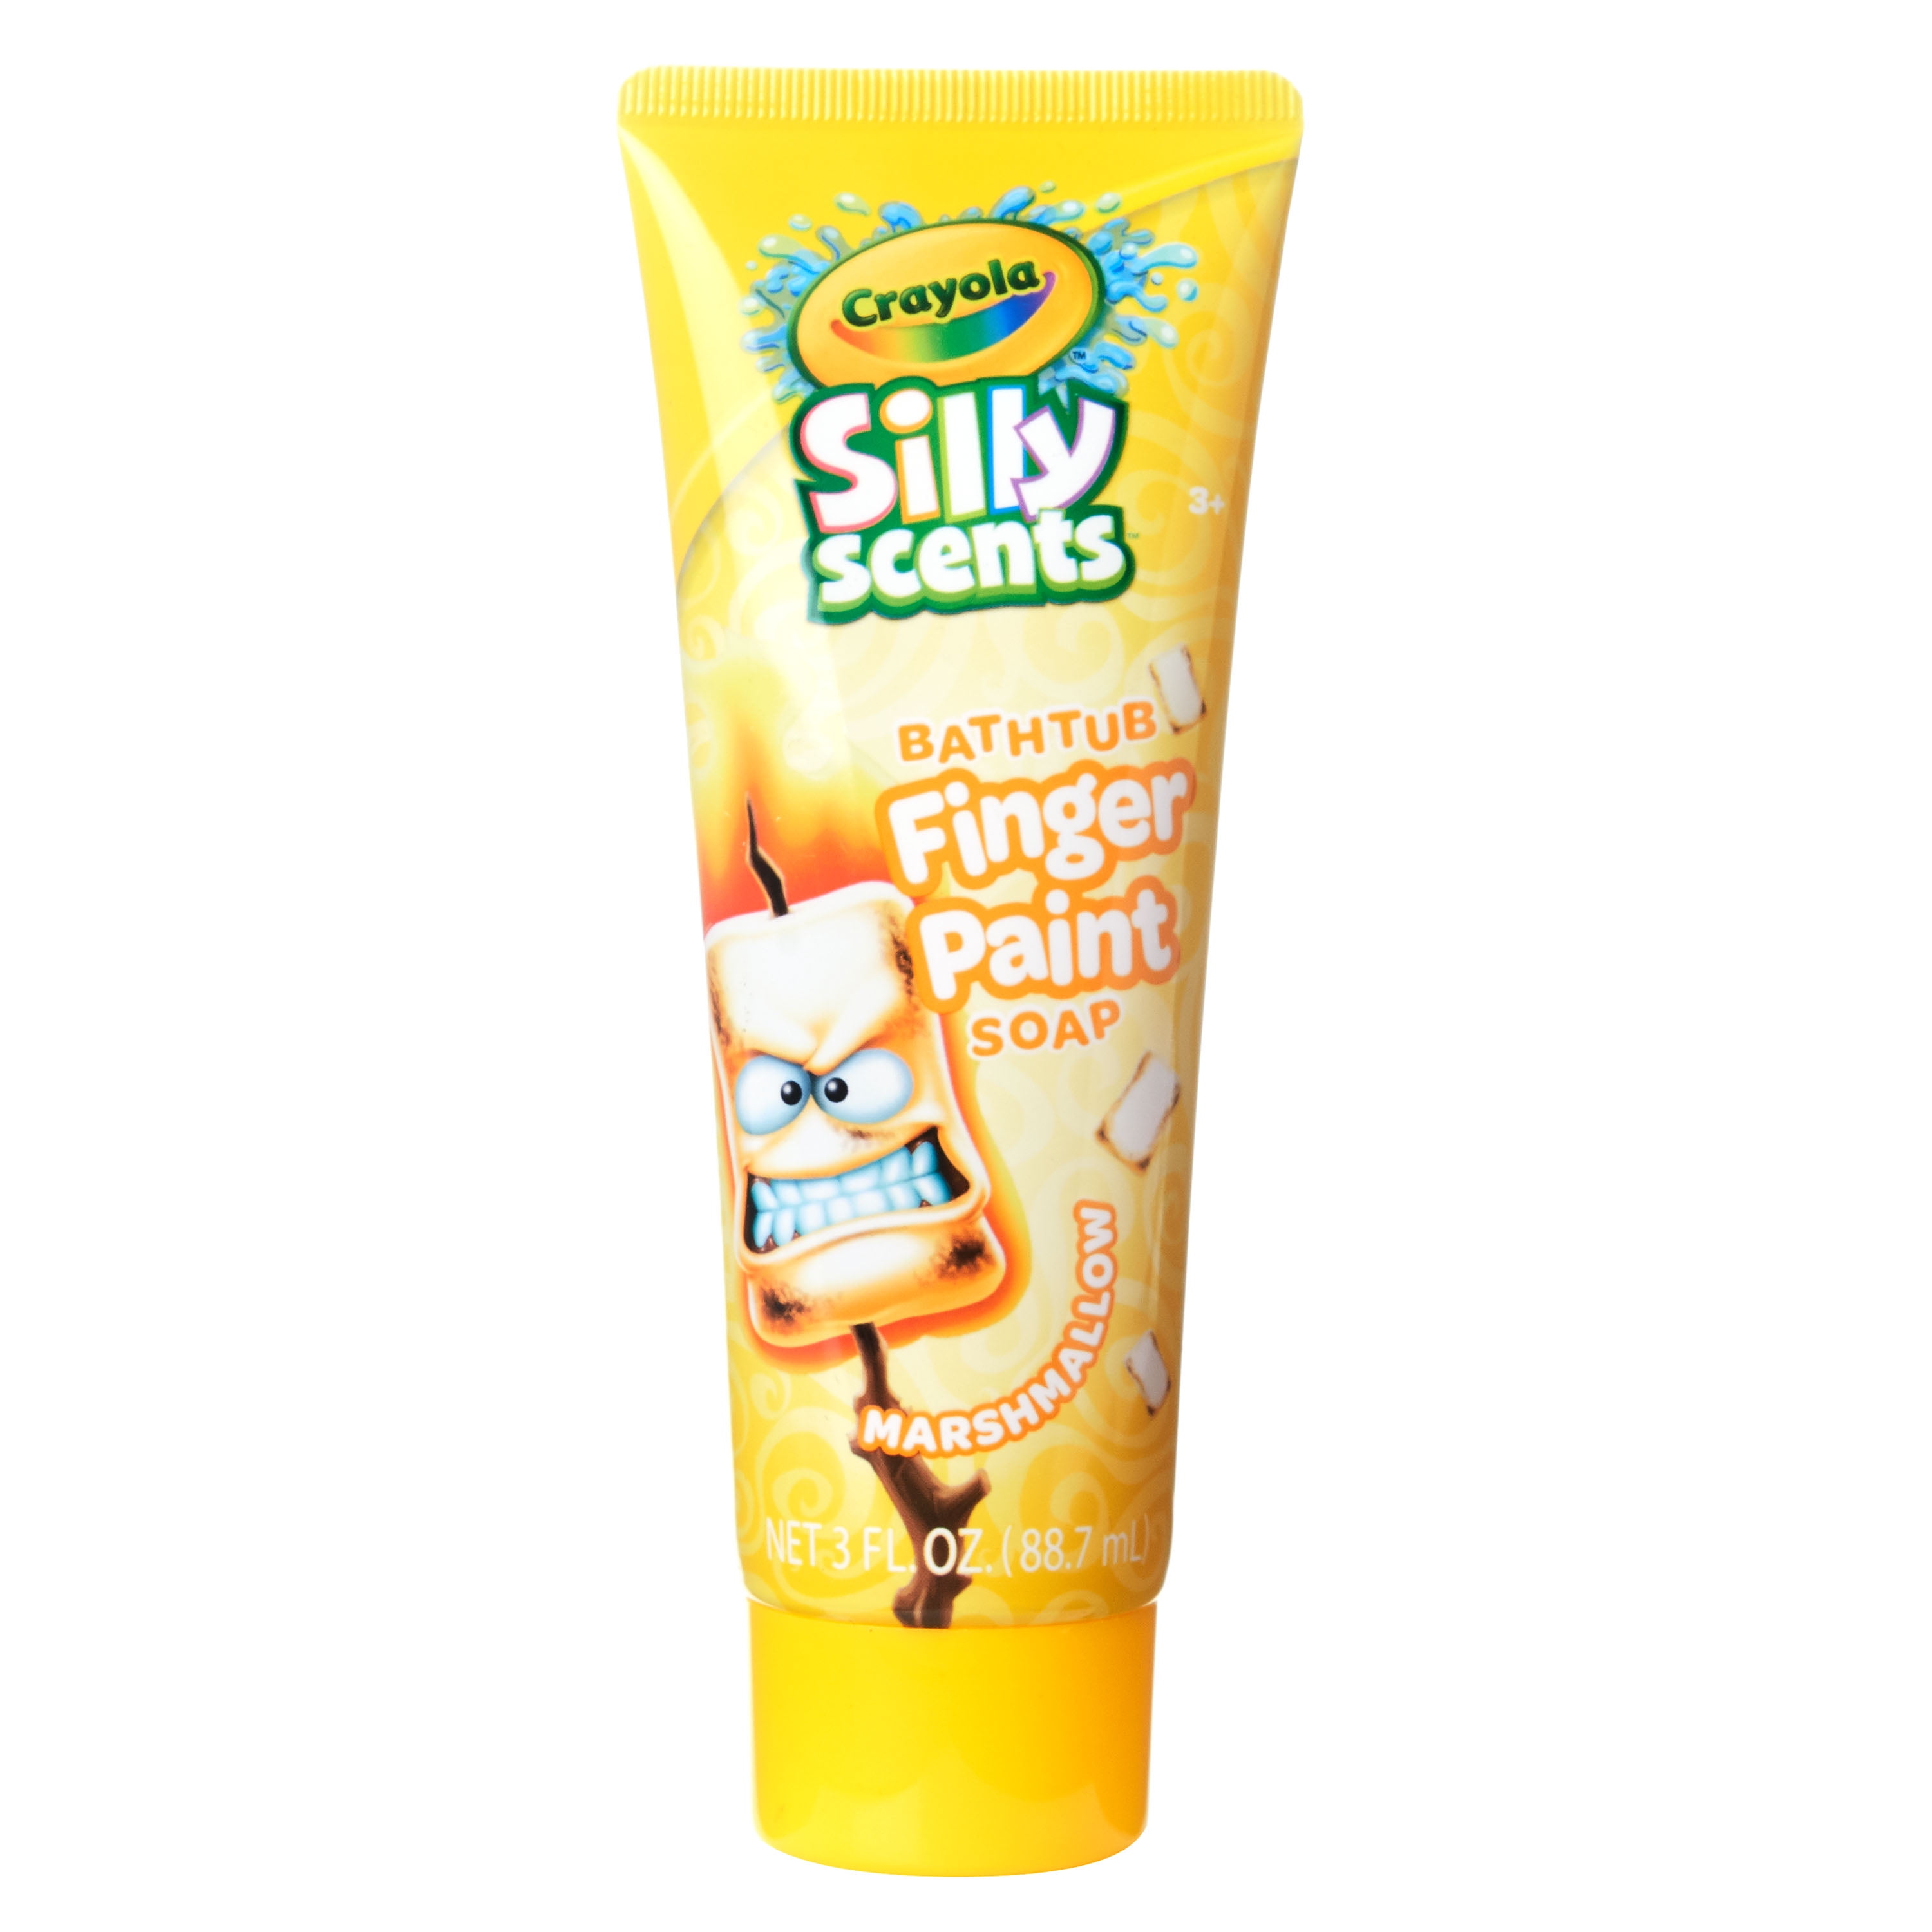 Bathtub Crayon Soap 8 pack *fruity Rings scent* – bubblebeebathtreats